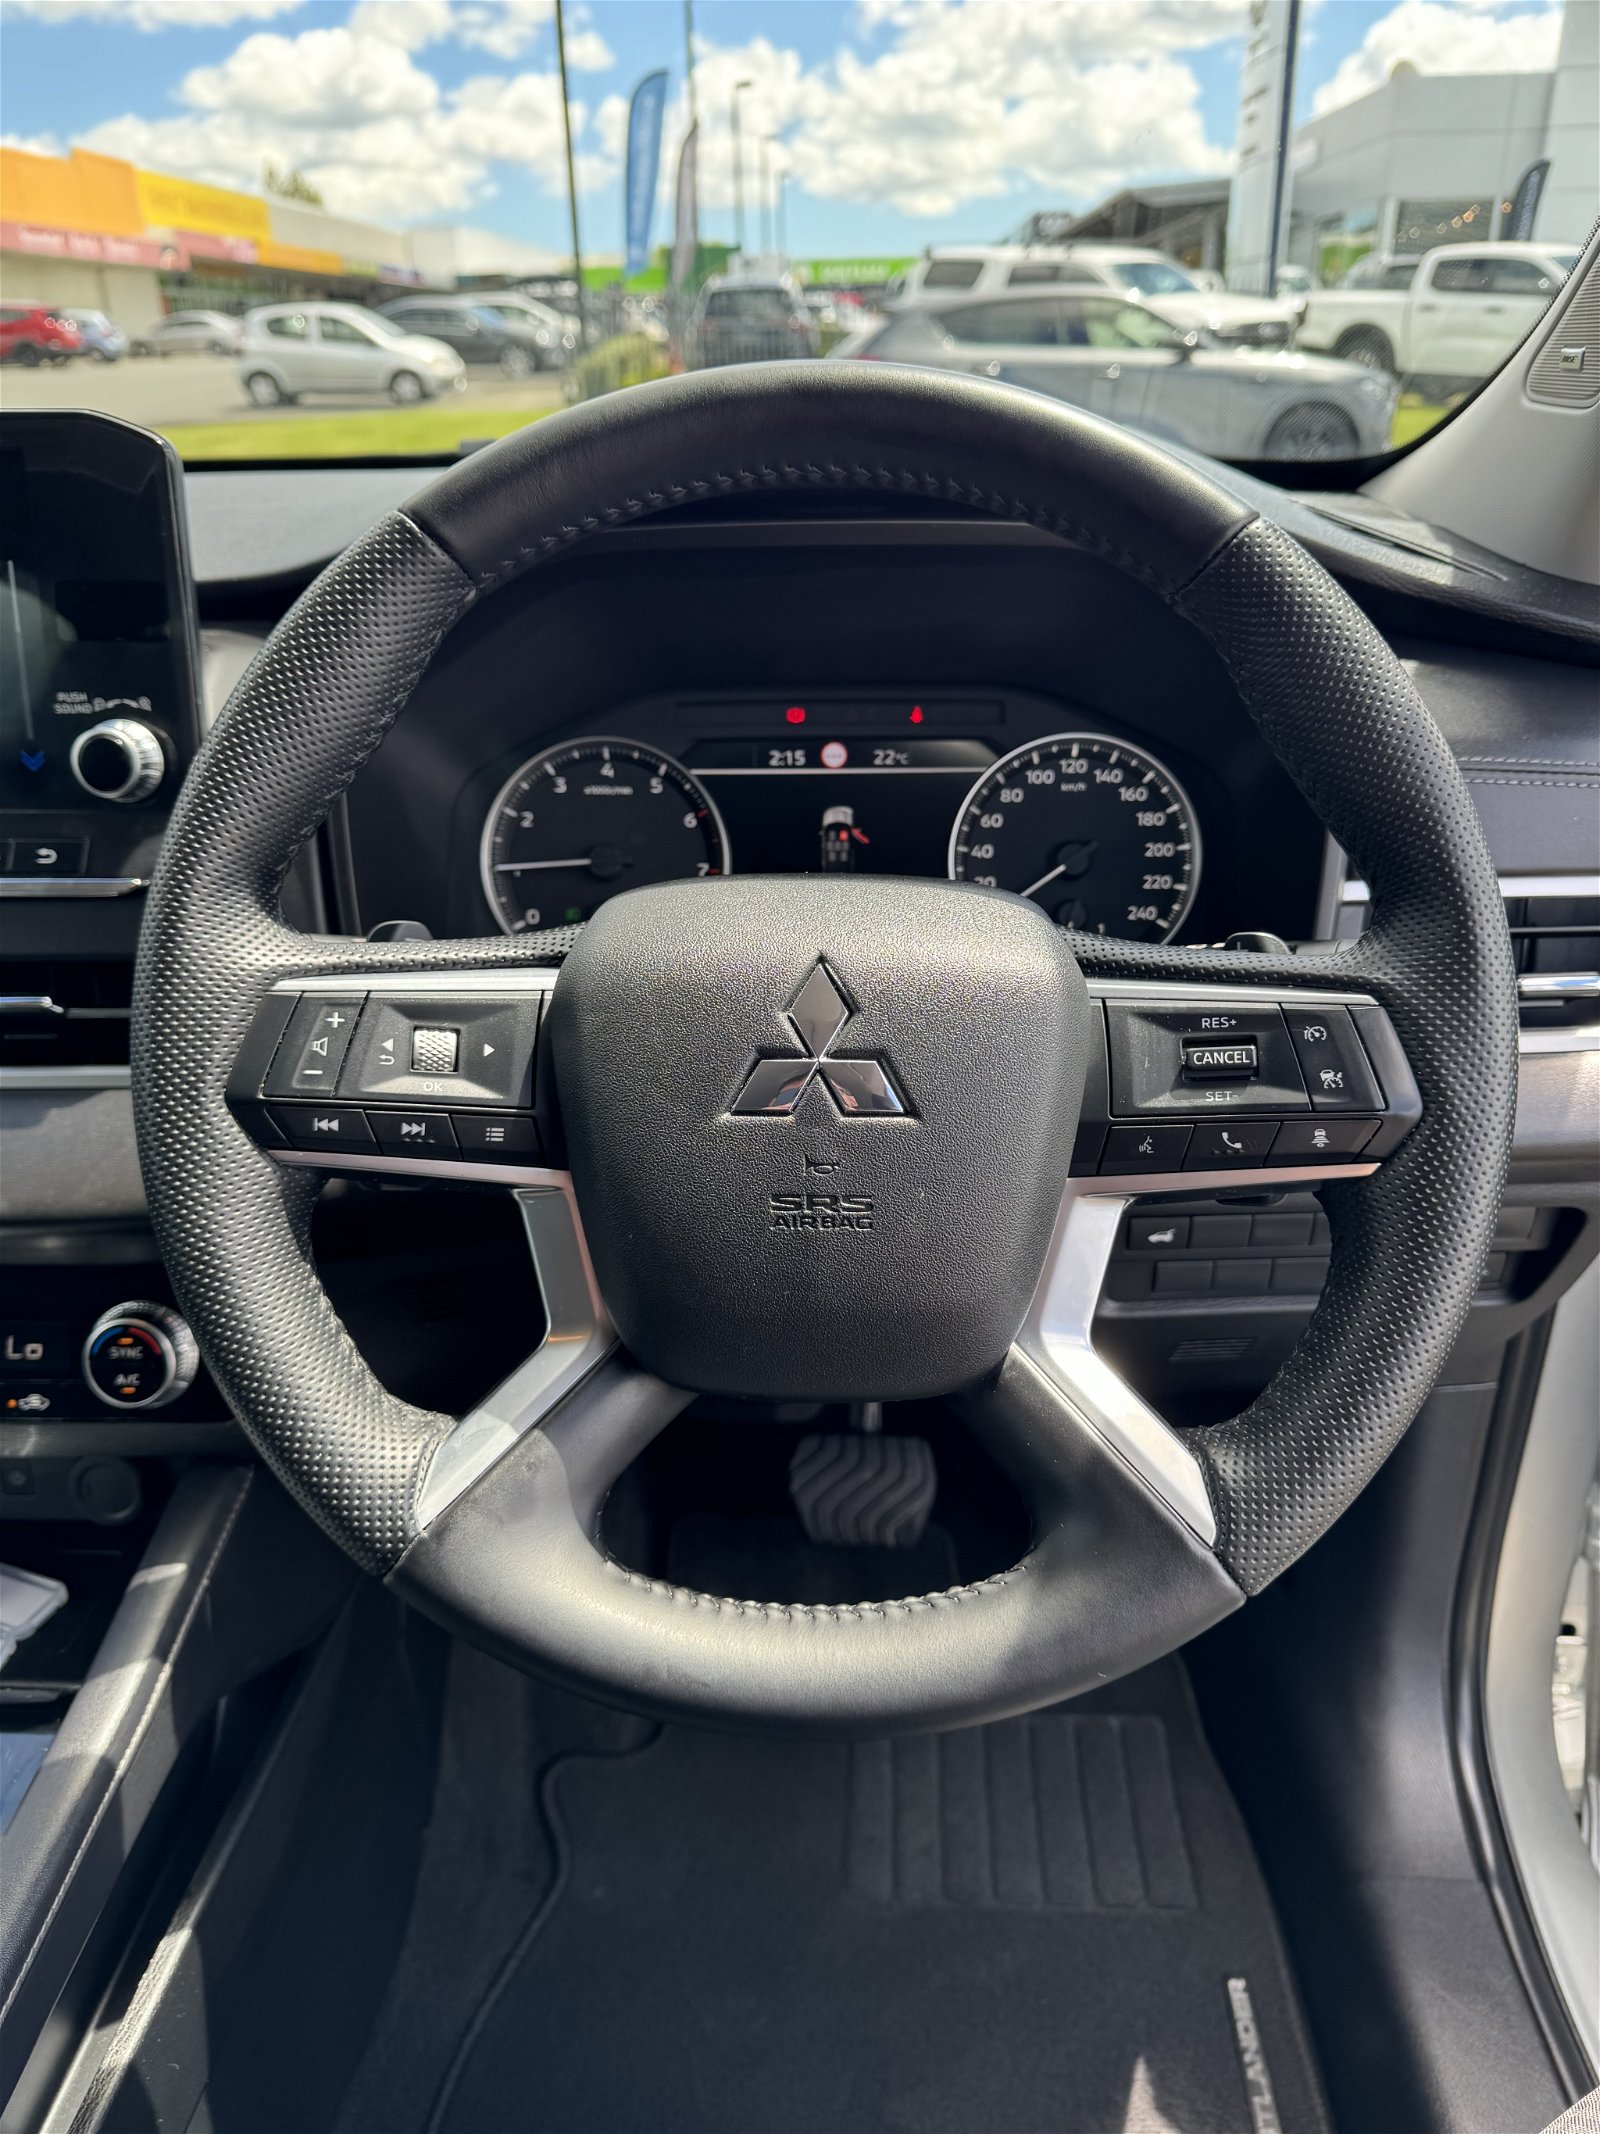 2022 Mitsubishi Outlander VRX 4WD